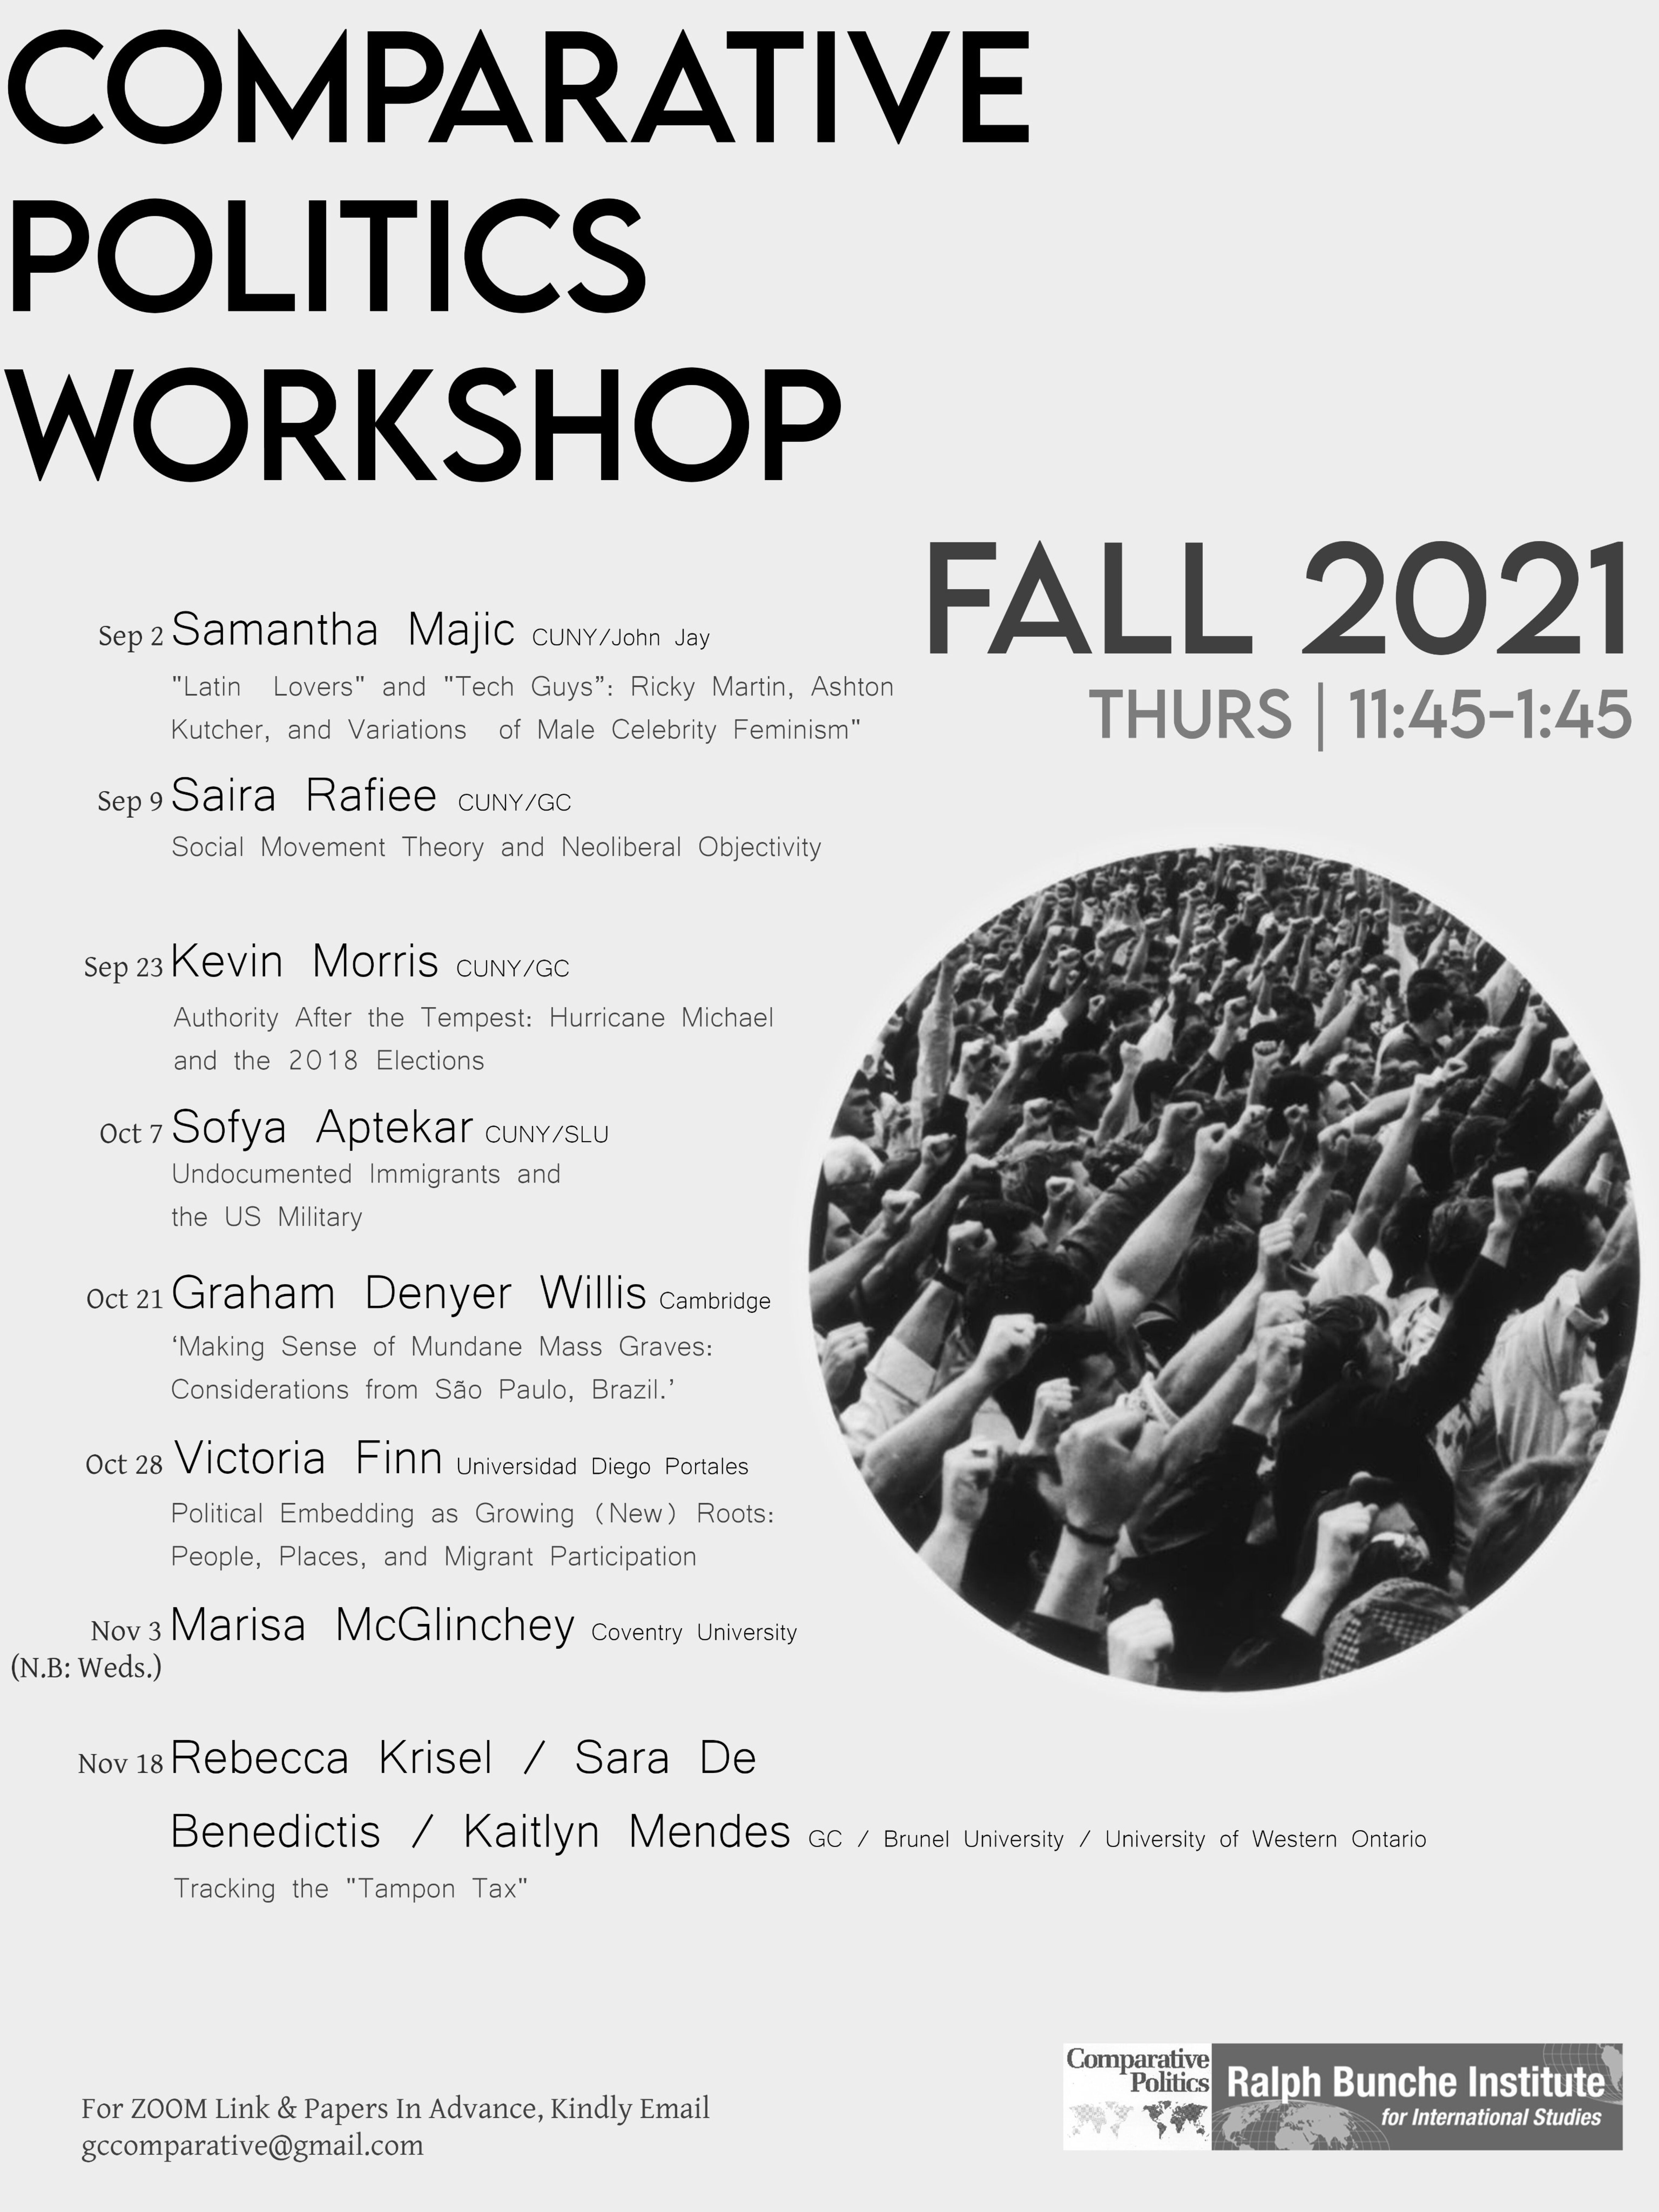 Comparative Politics Workshop Schedule Announced: Fall 2021